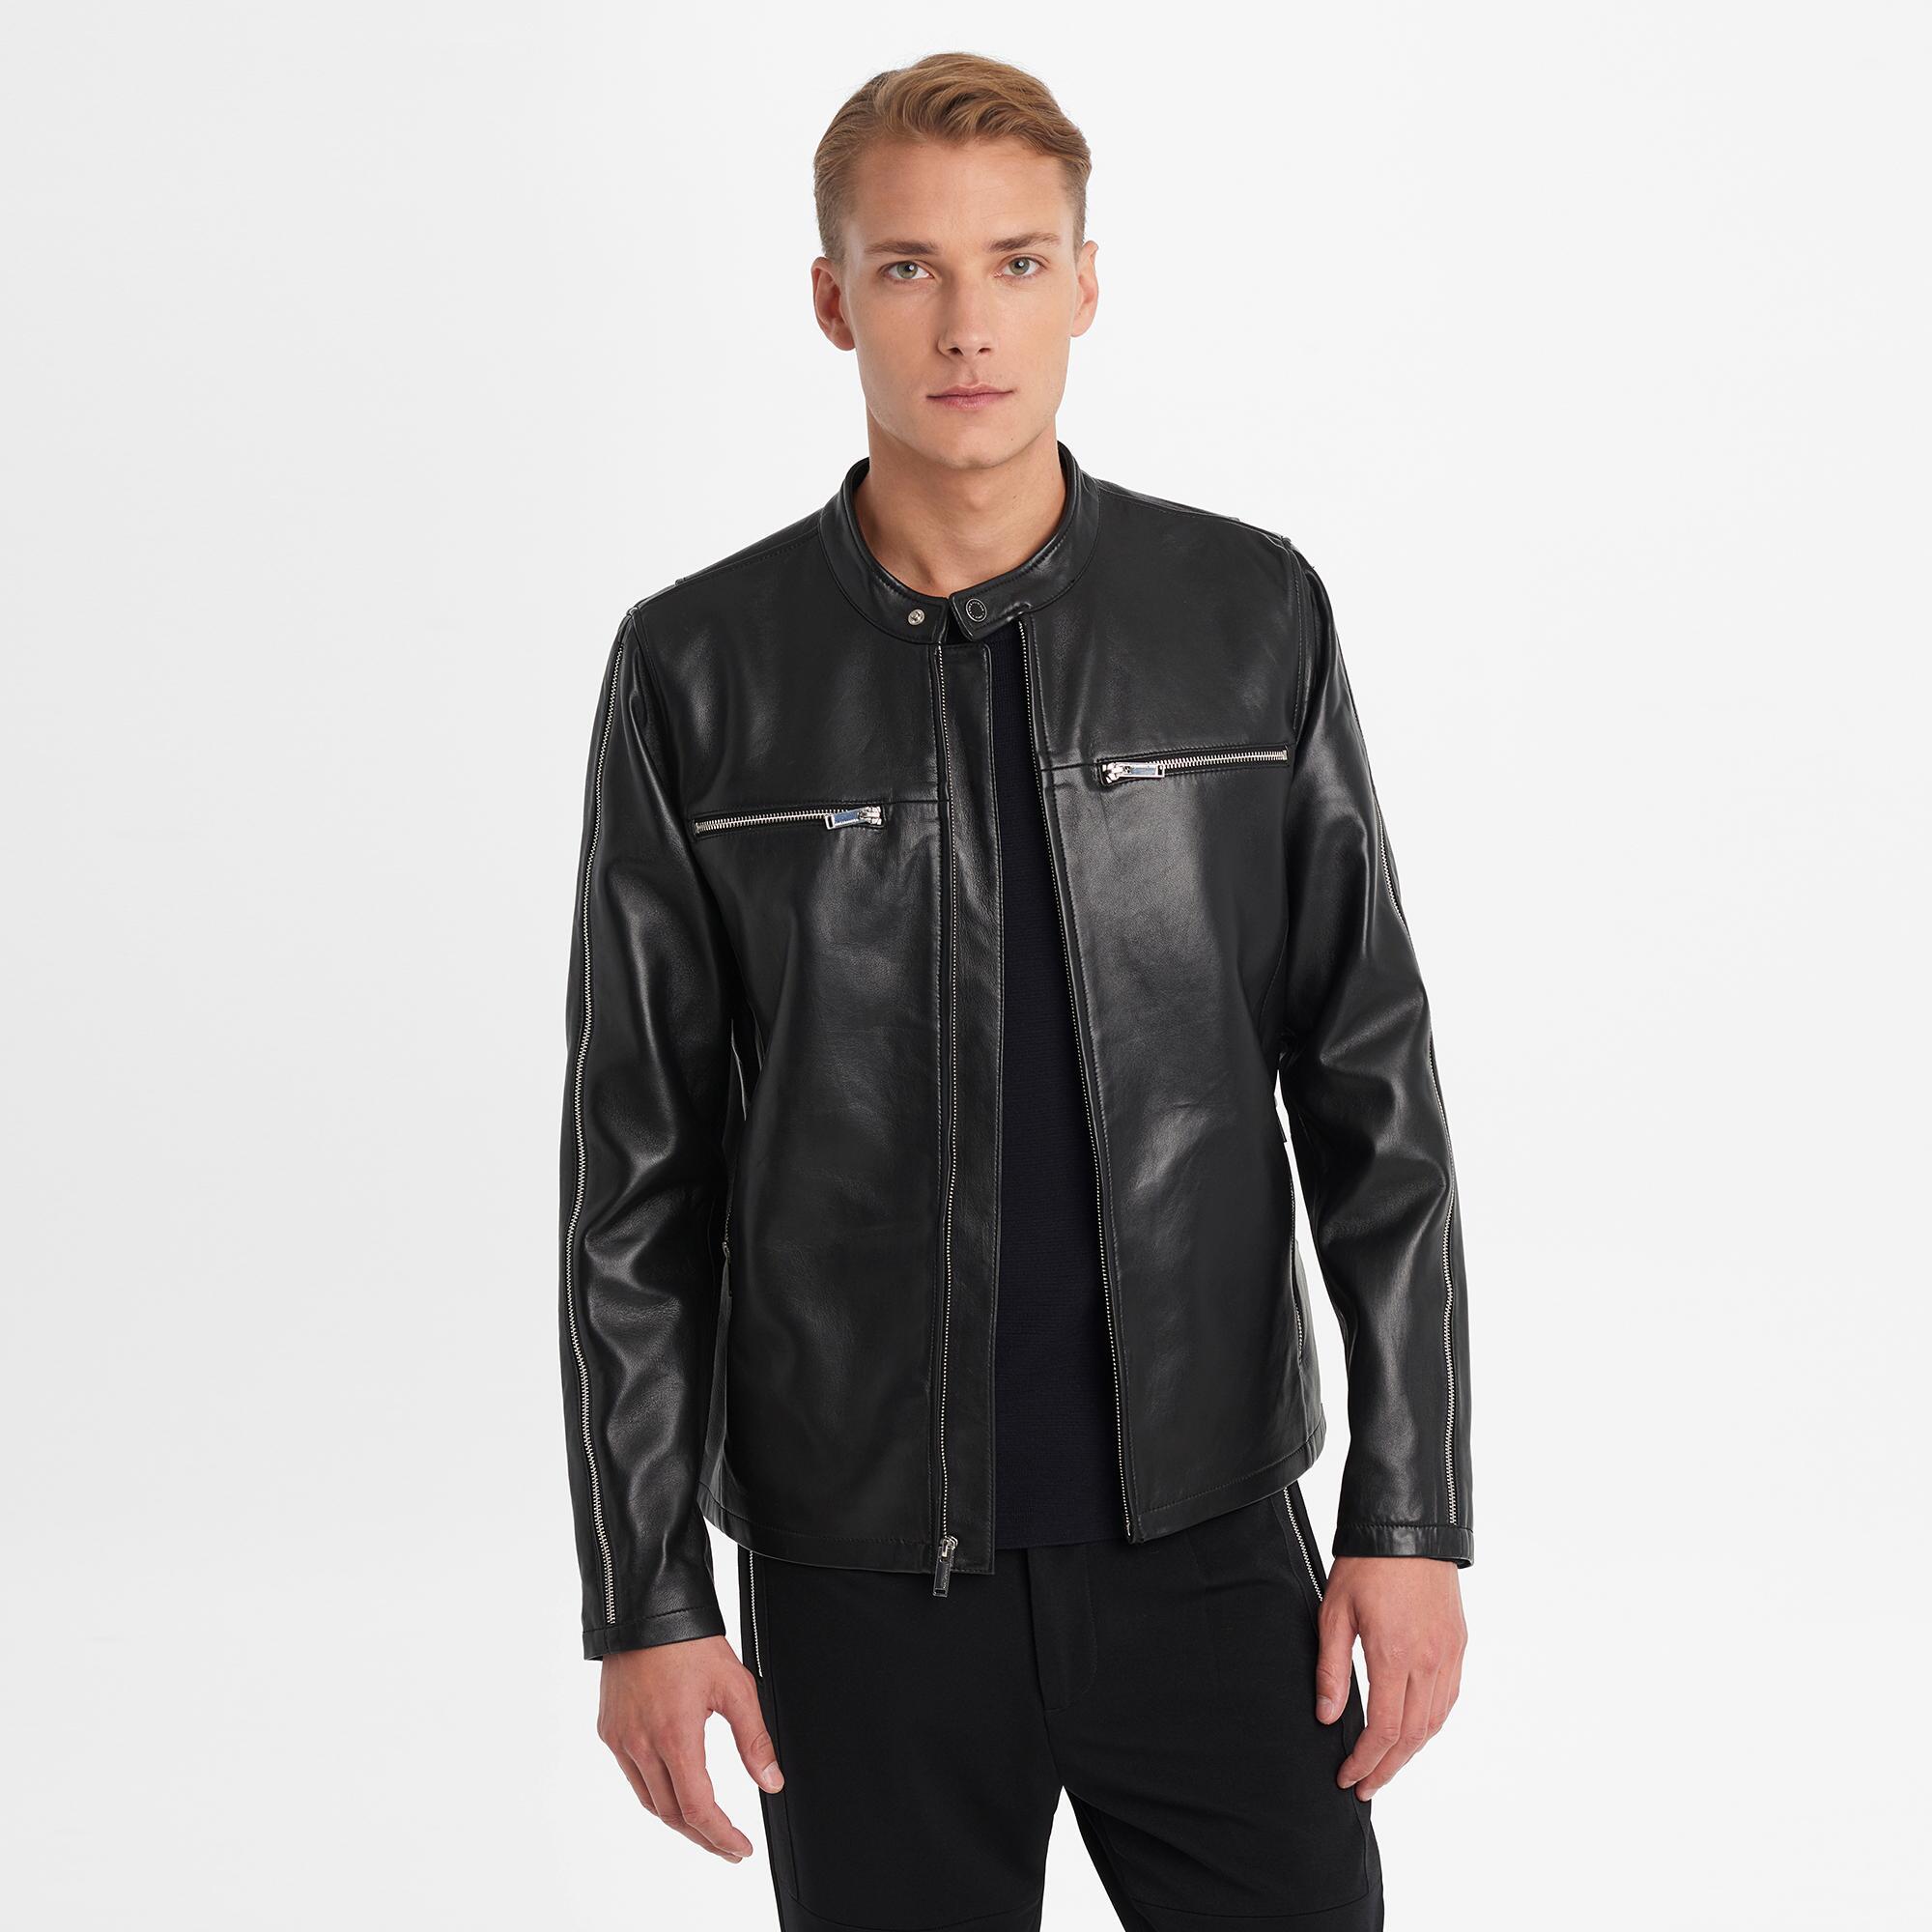 Karl Lagerfeld Full Zip Leather Jacket in Black for Men - Lyst